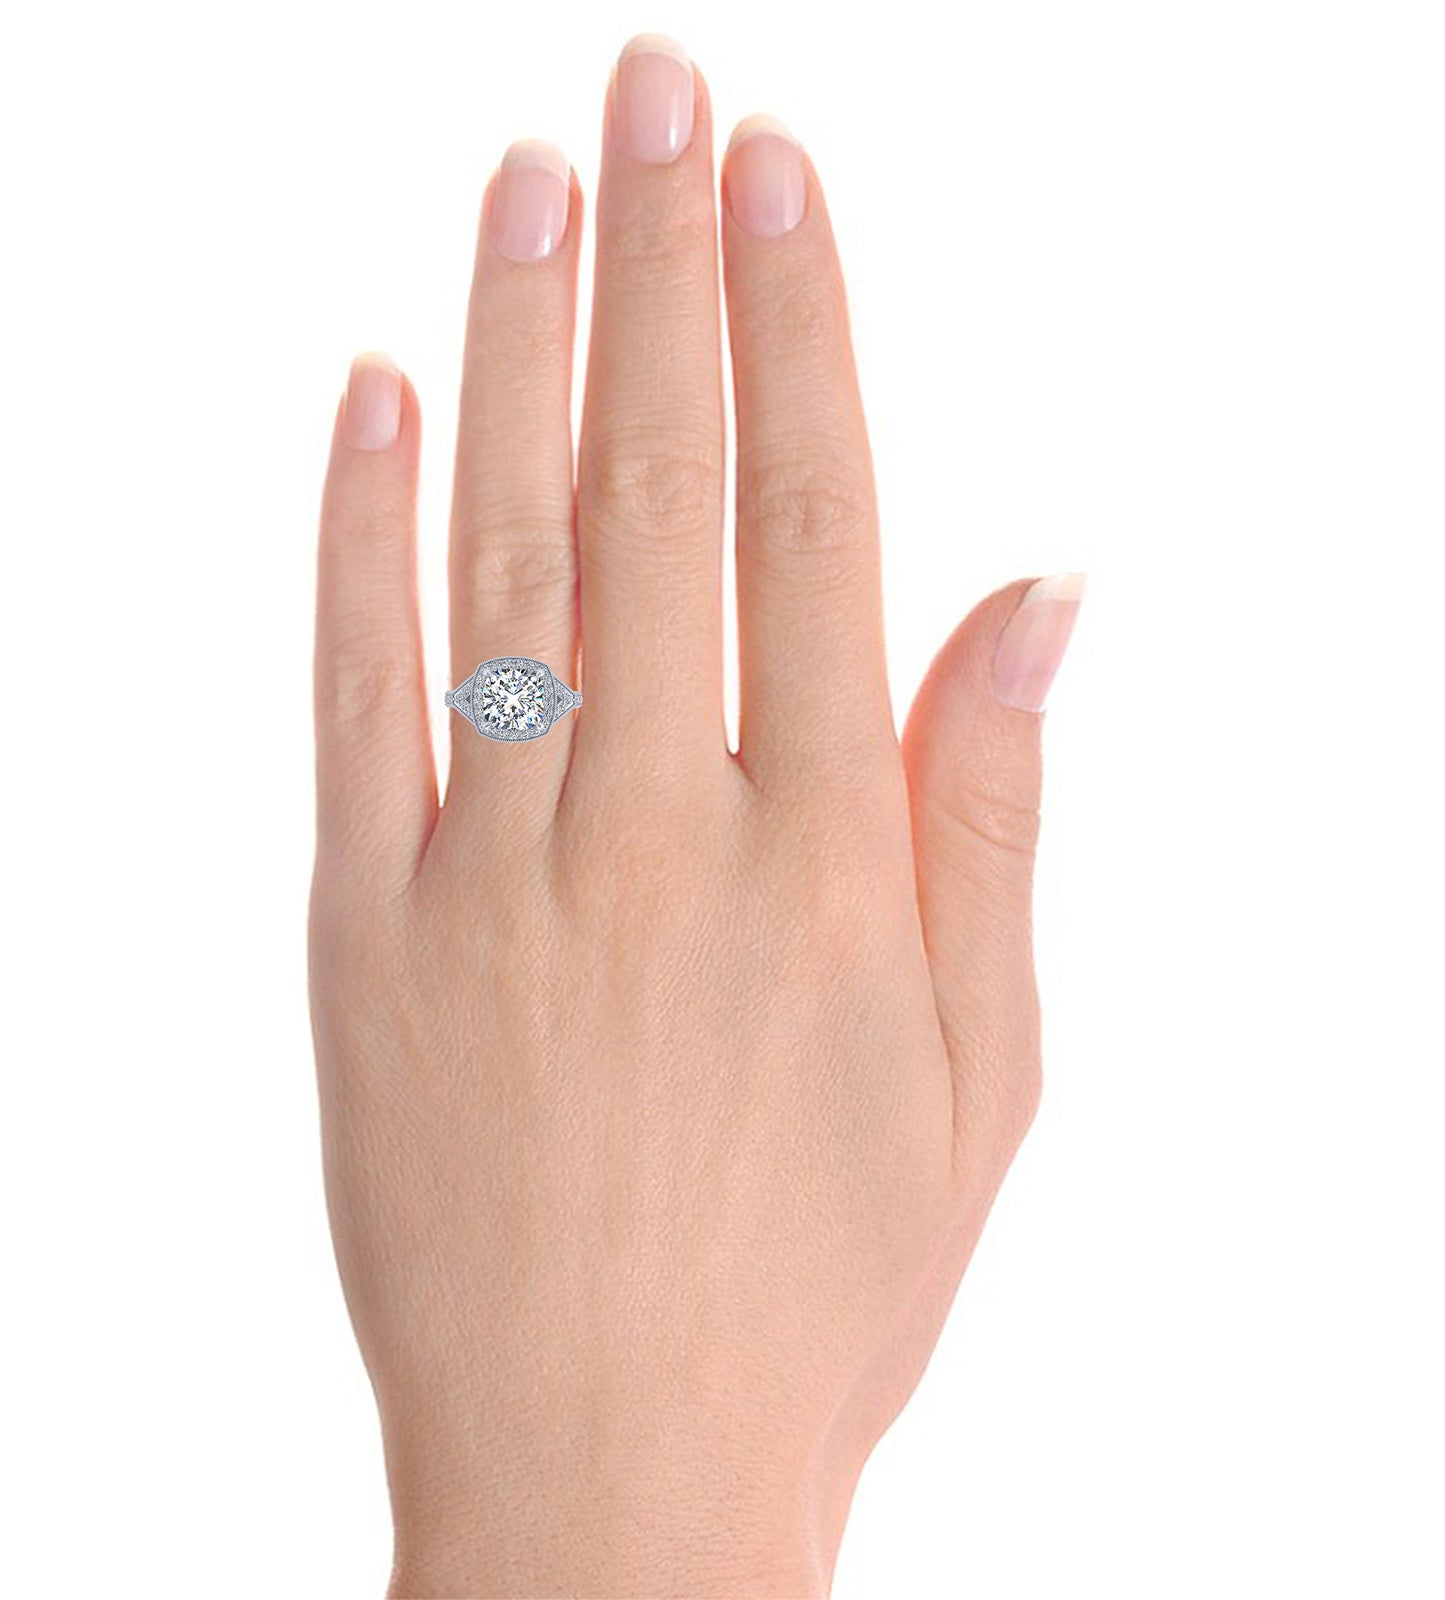 MILGRAIN CUSHION CUT ROYAL HALO DIAMOND ENGAGEMENT RING